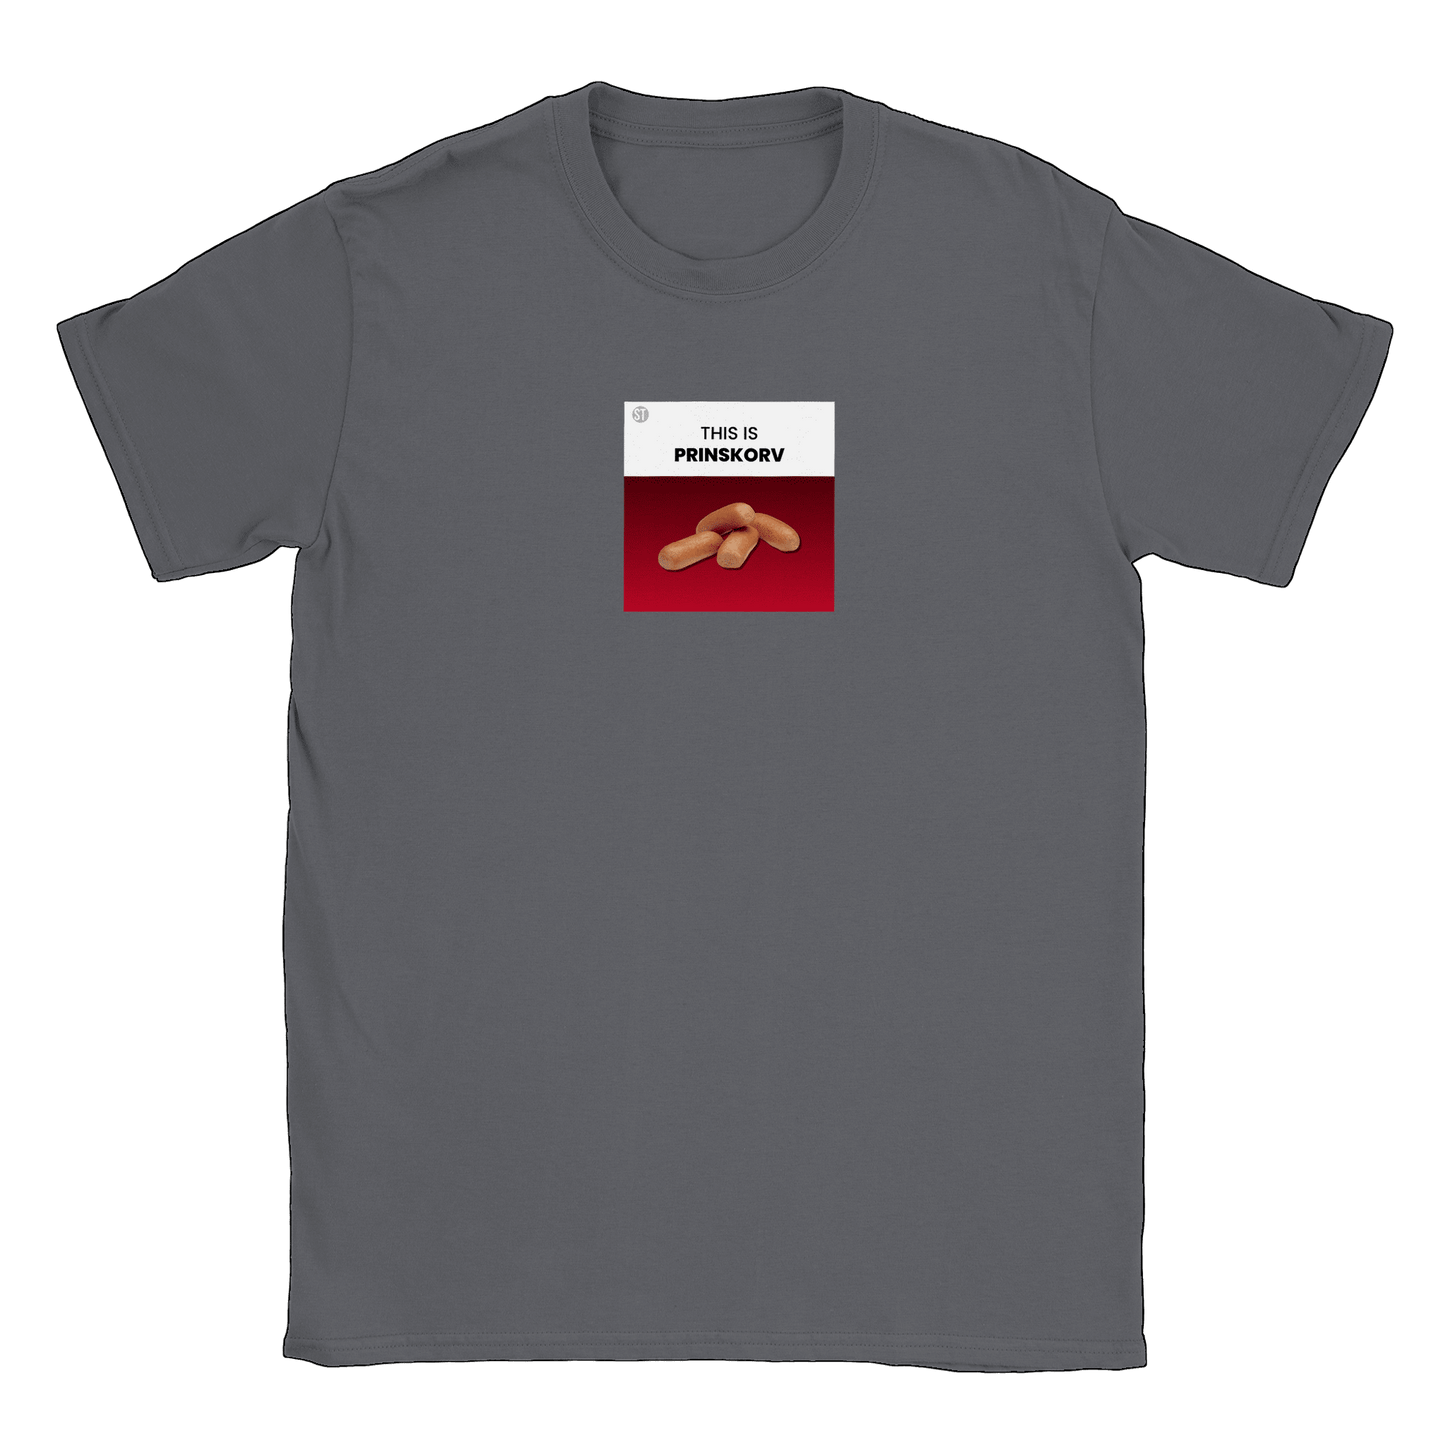 This is Prinskorv - T-shirt Charcoal